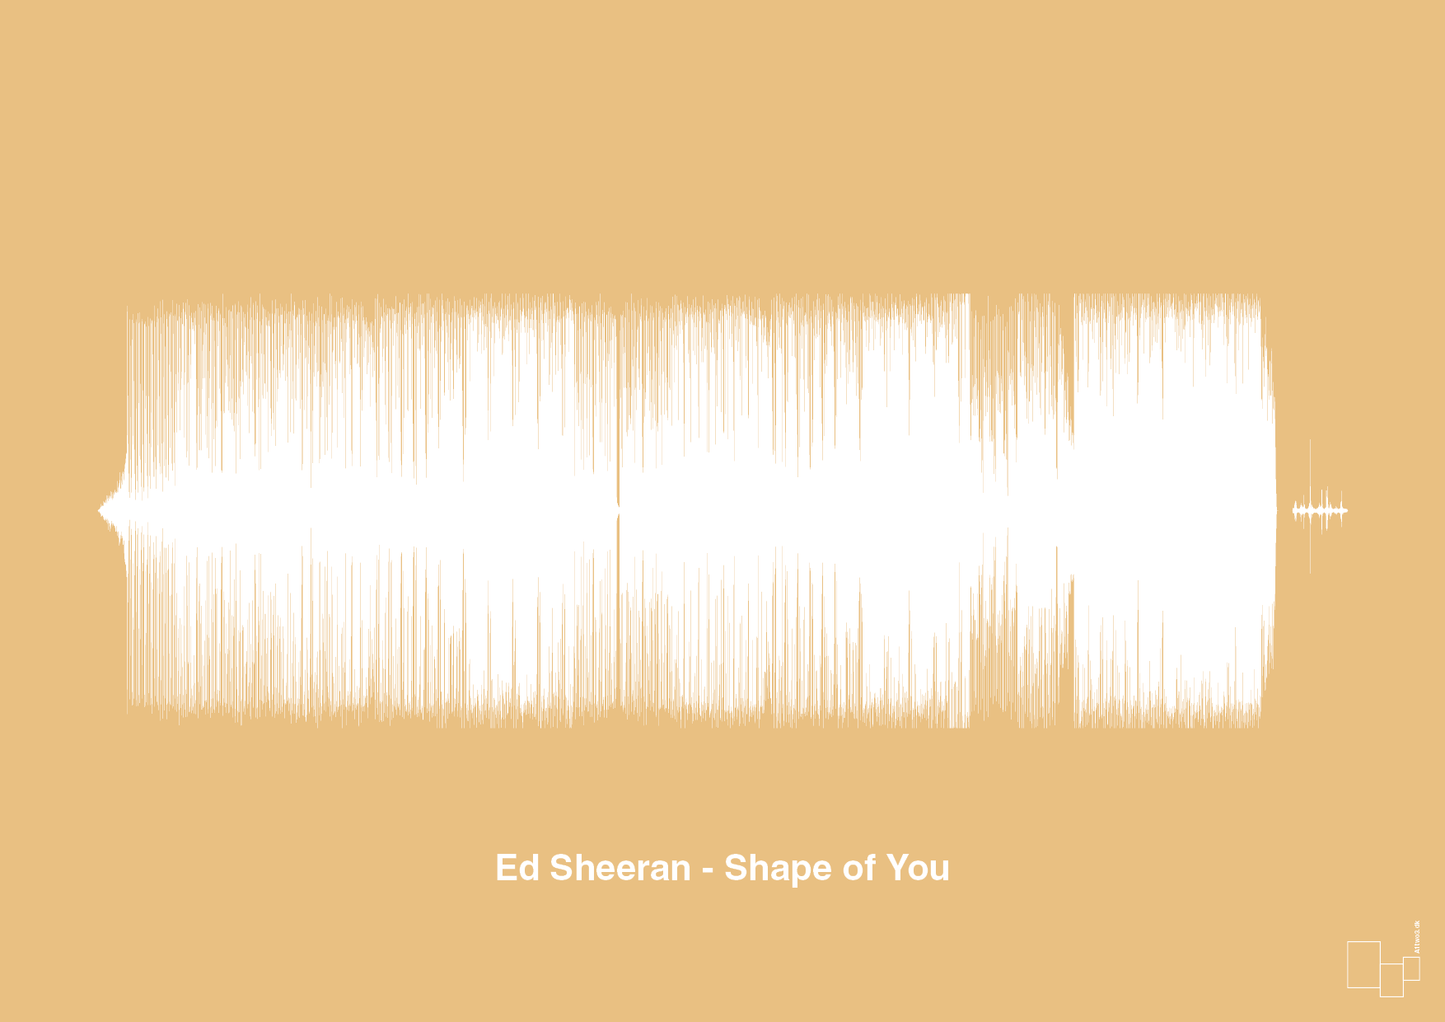 ed sheeran - shape of you - Plakat med Musik i Charismatic